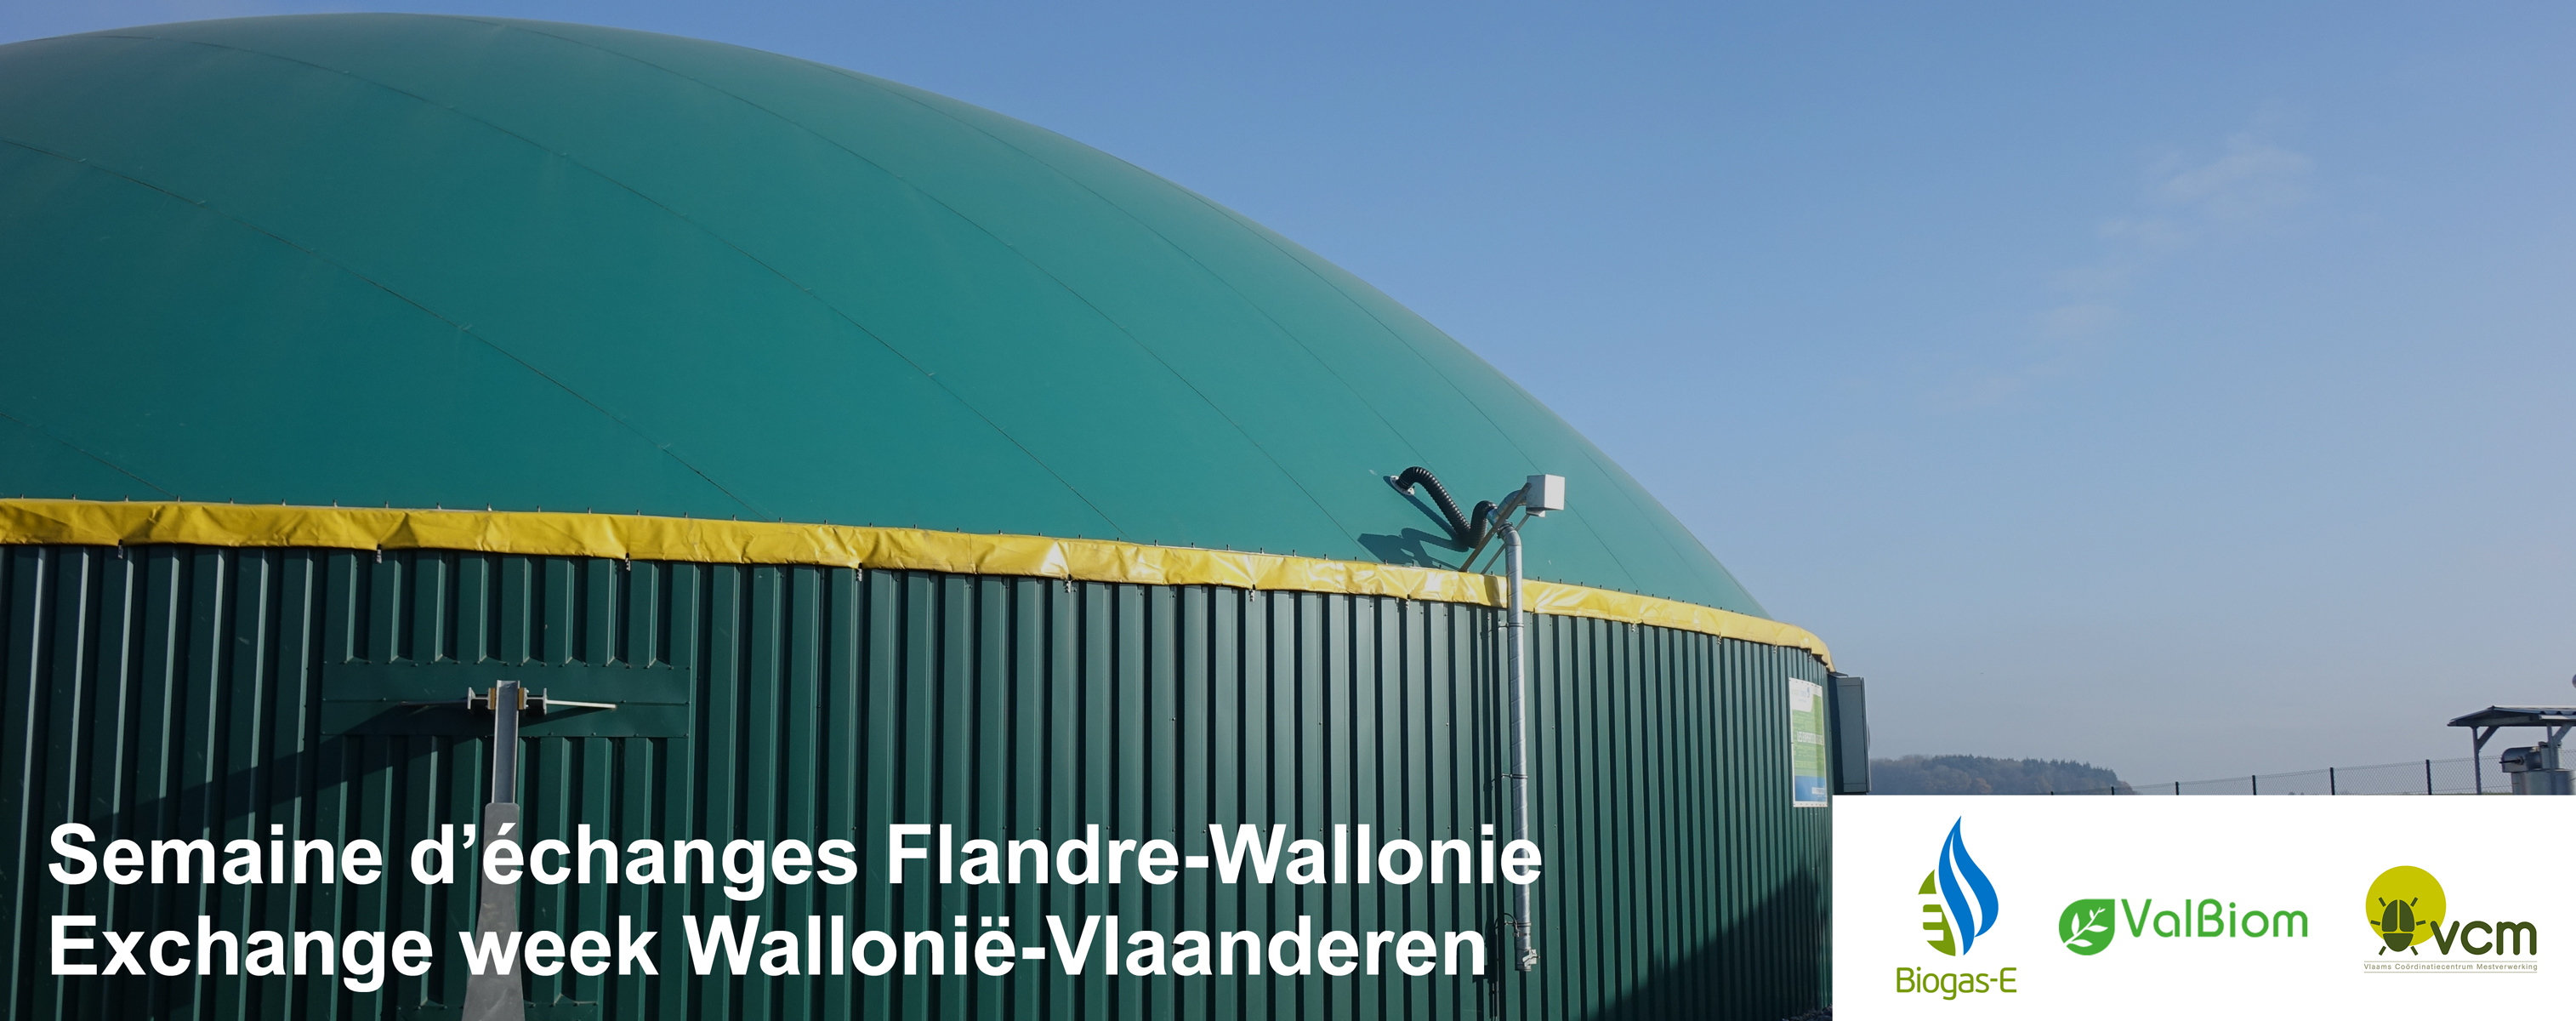 belgian biogas week